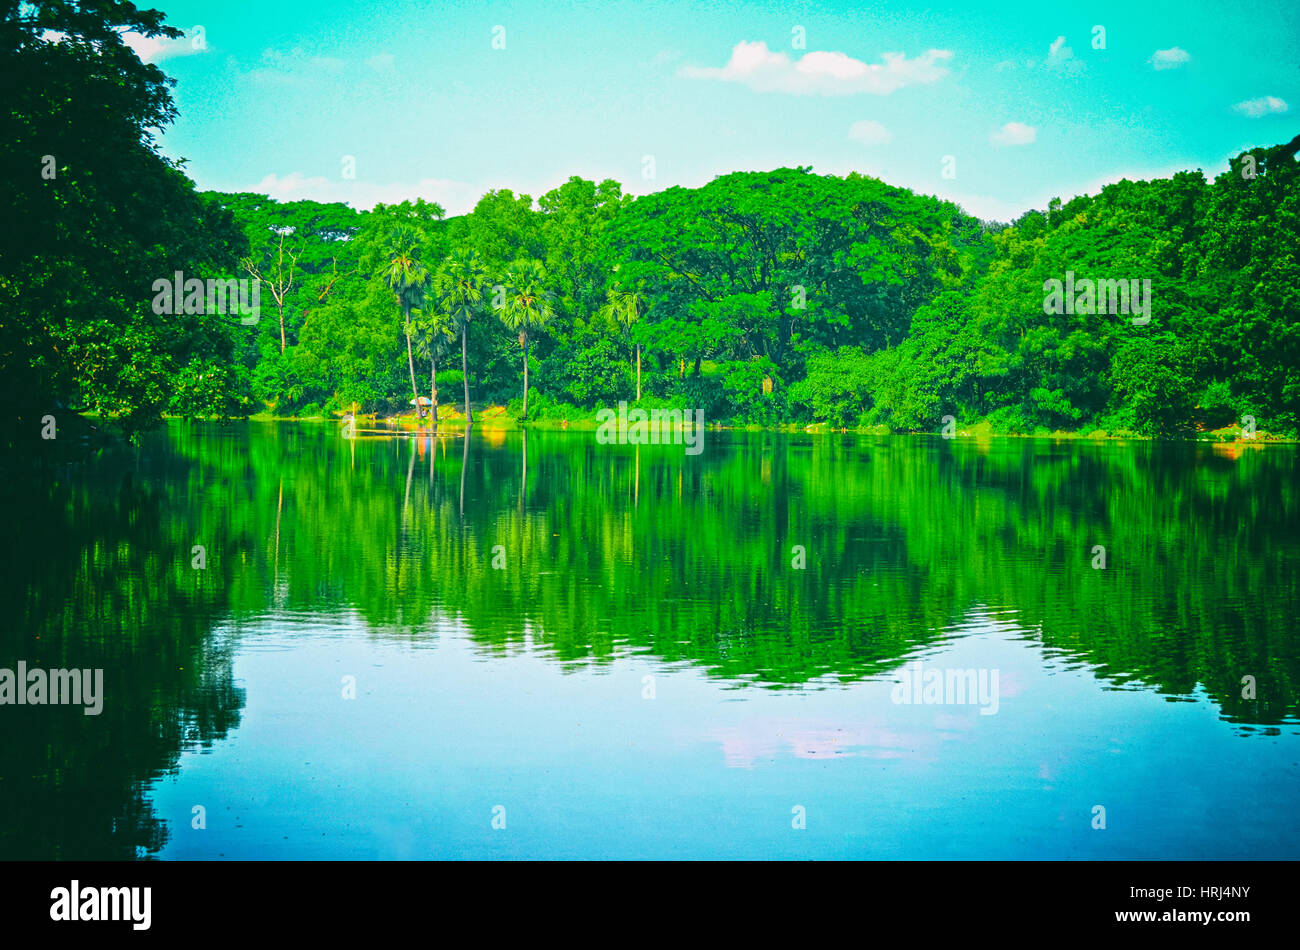 Sauberen See im grünen Frühling Sommer Wald. Sonnigen Himmel. Stockfoto